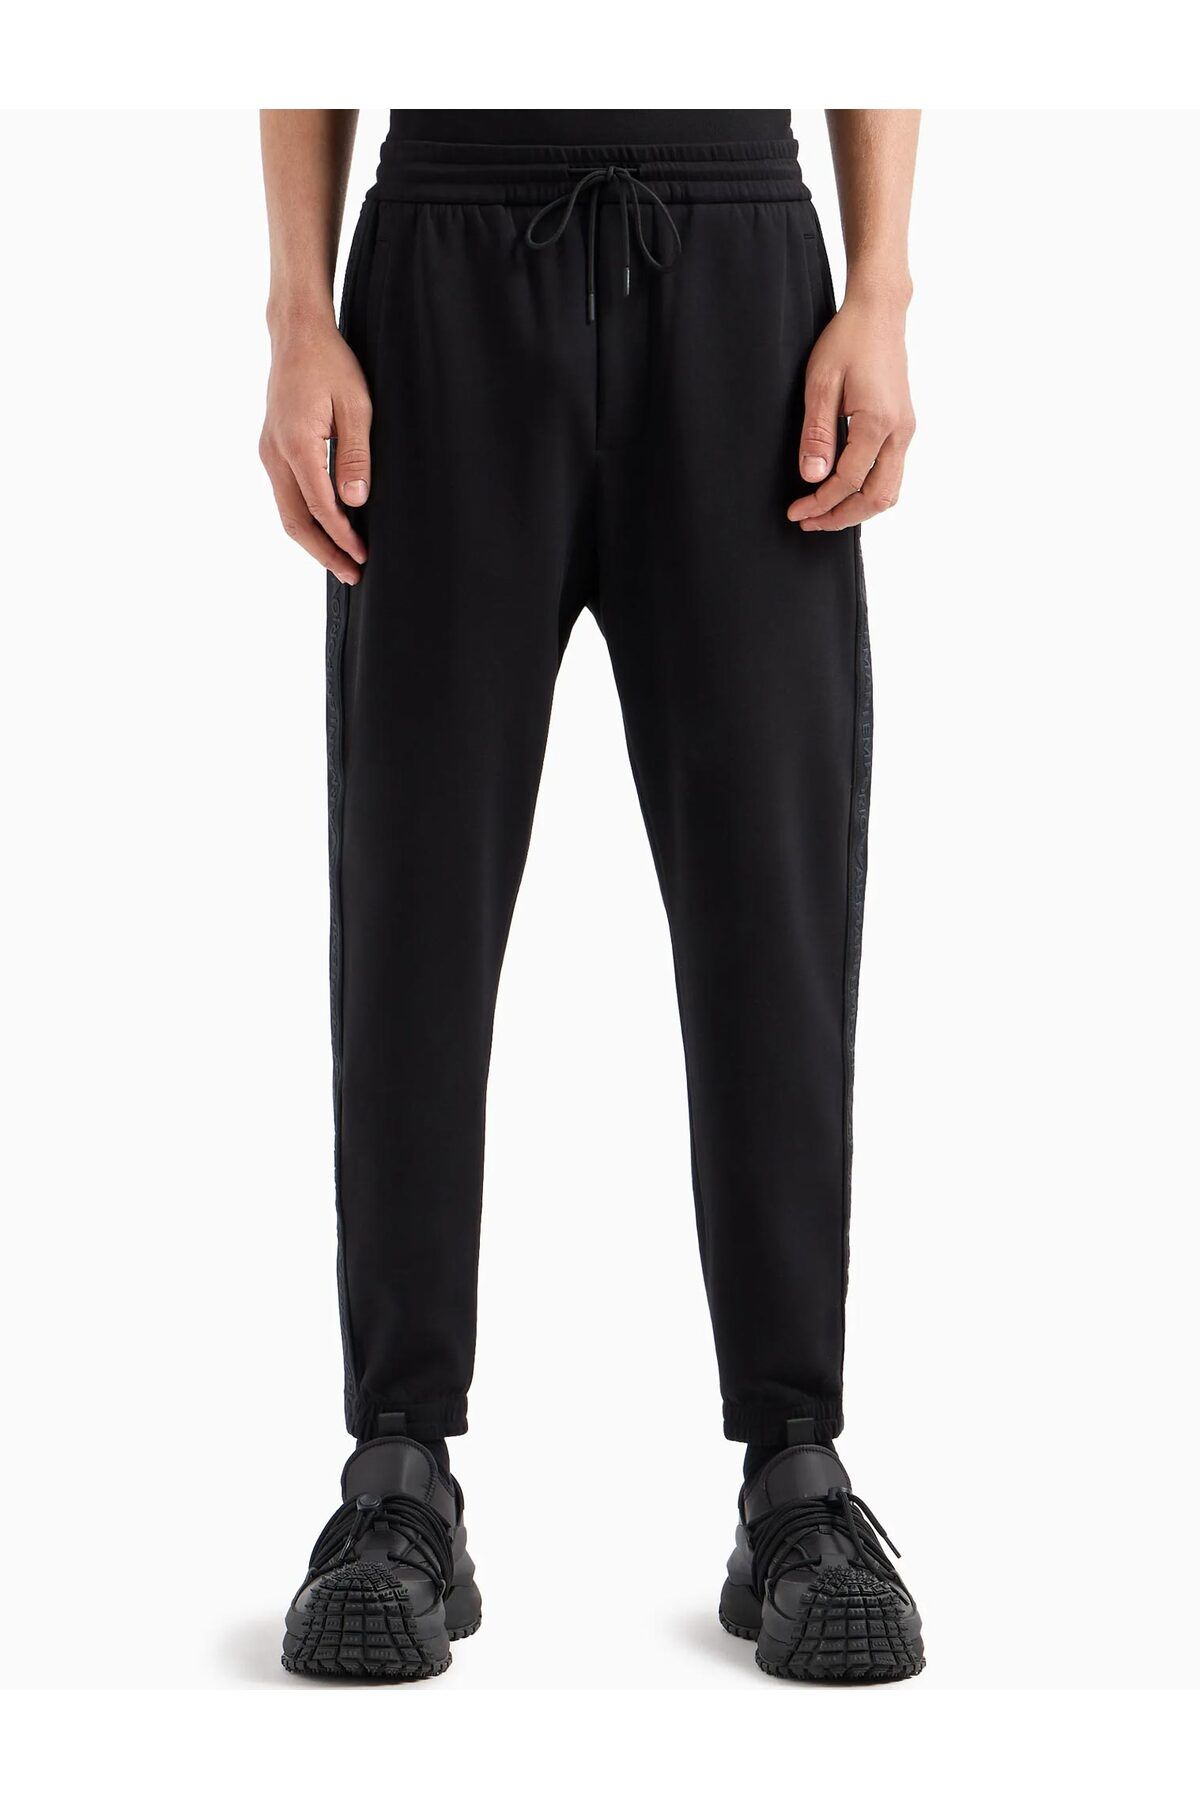 Emporio Armani Erkek Marka Logo Detaylı Lastik Bel ve Bilek Siyah Pantolon 3D1P68 1JHSZ-0999